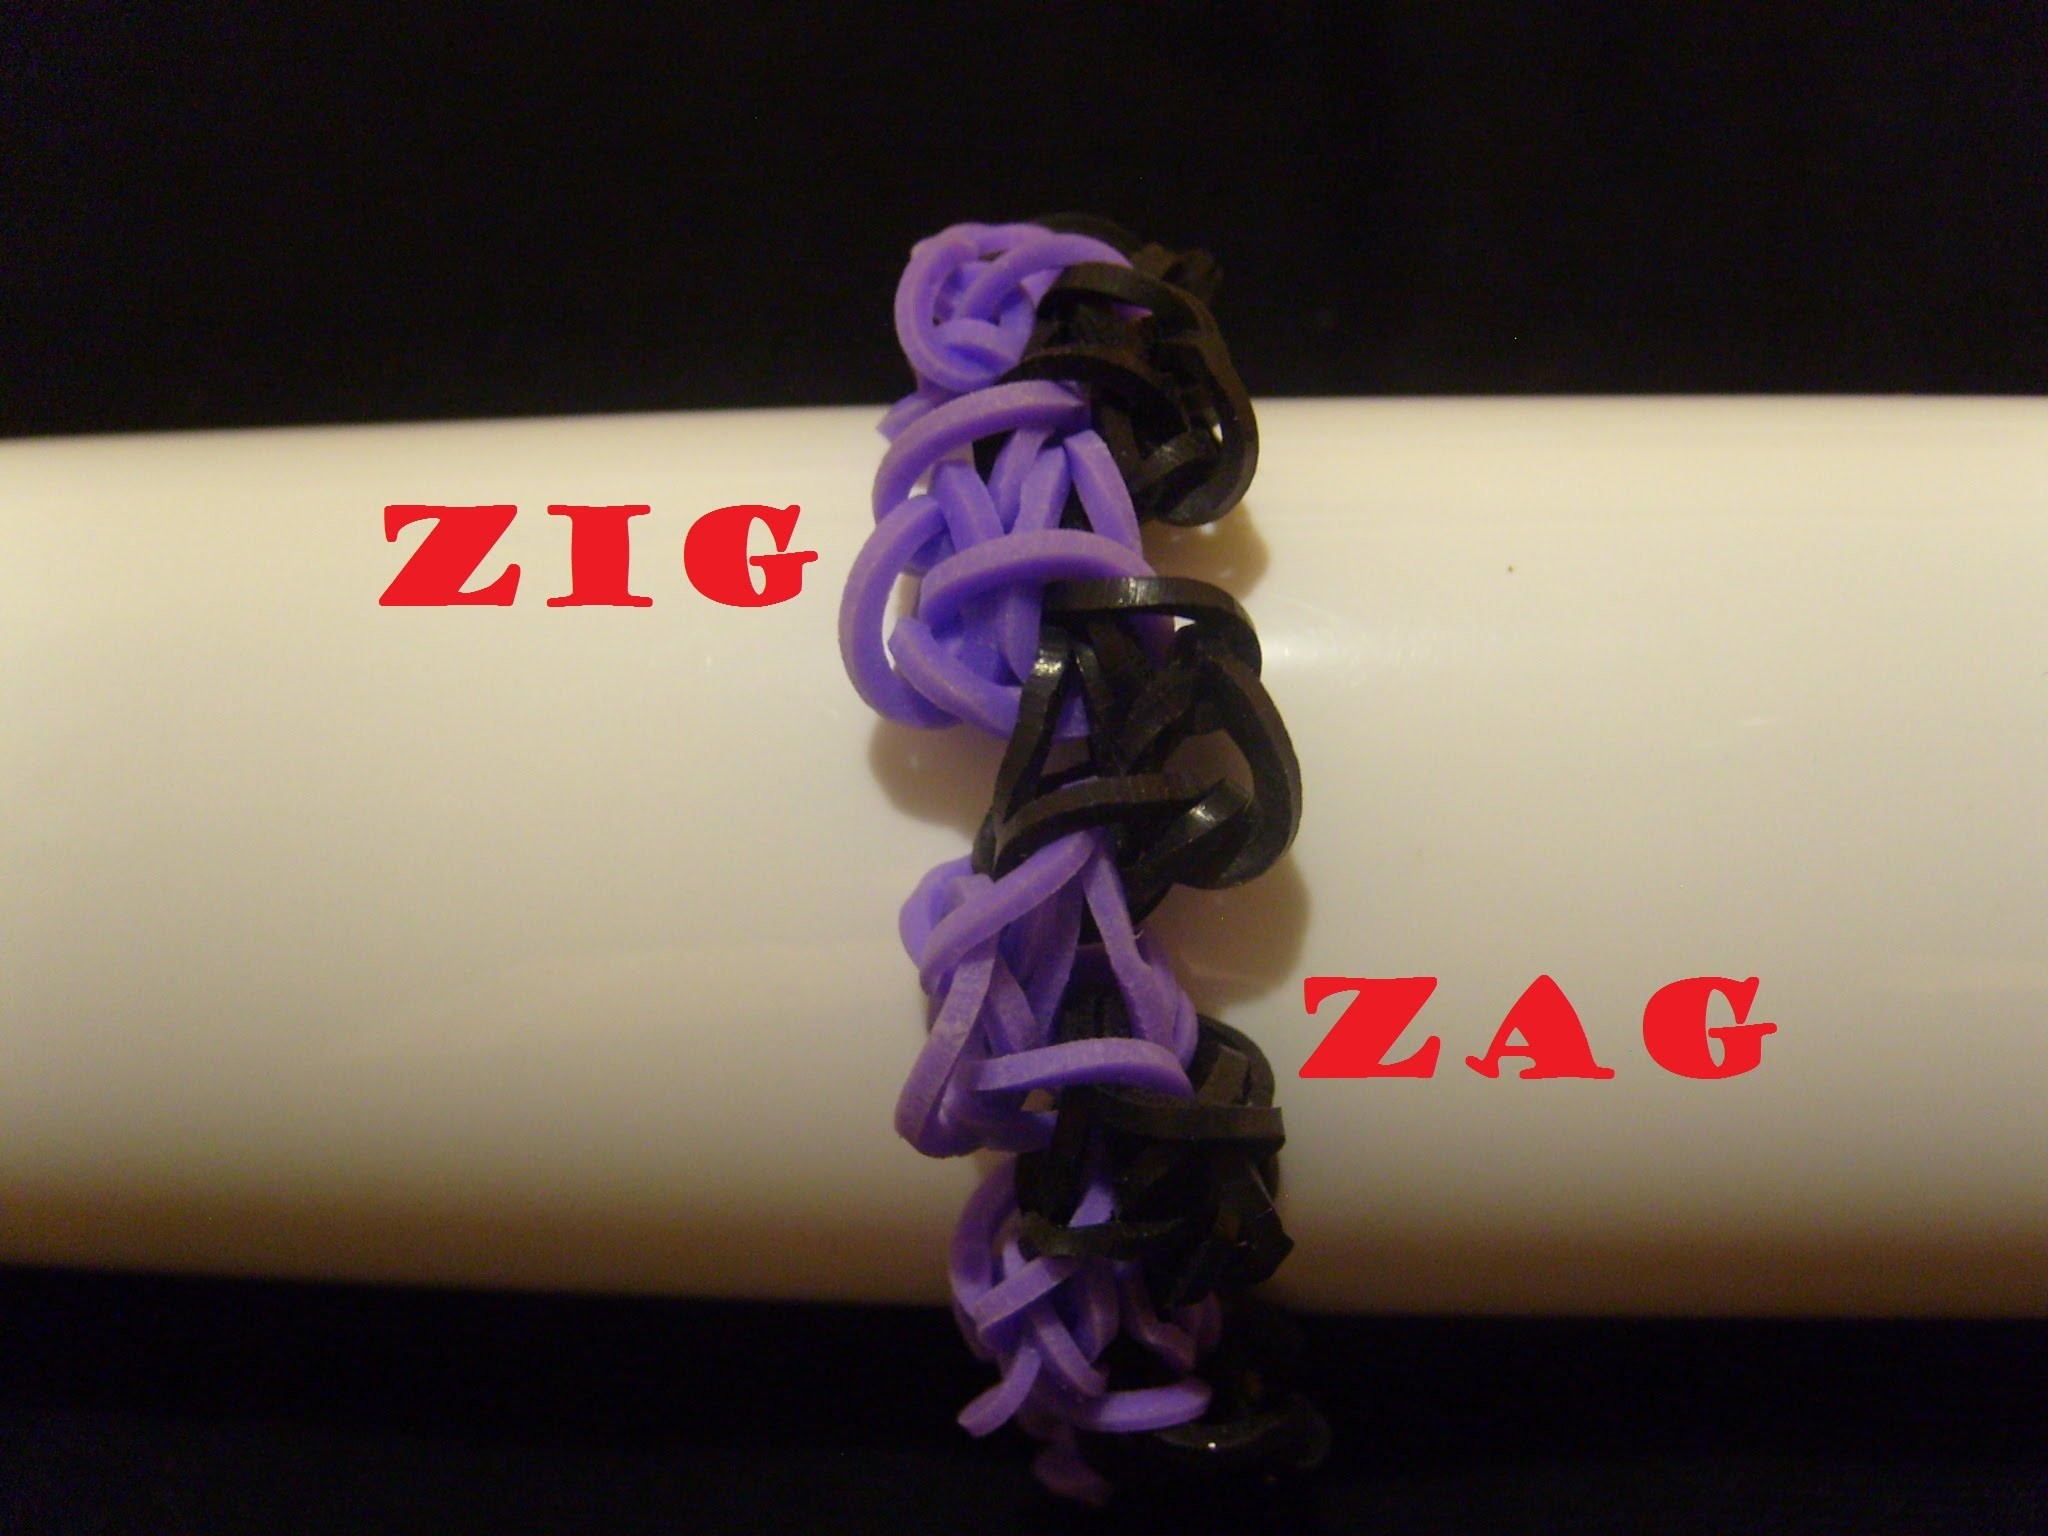 Bracelet elastique ZigZag, tuto francais facile, rainbow loom bands